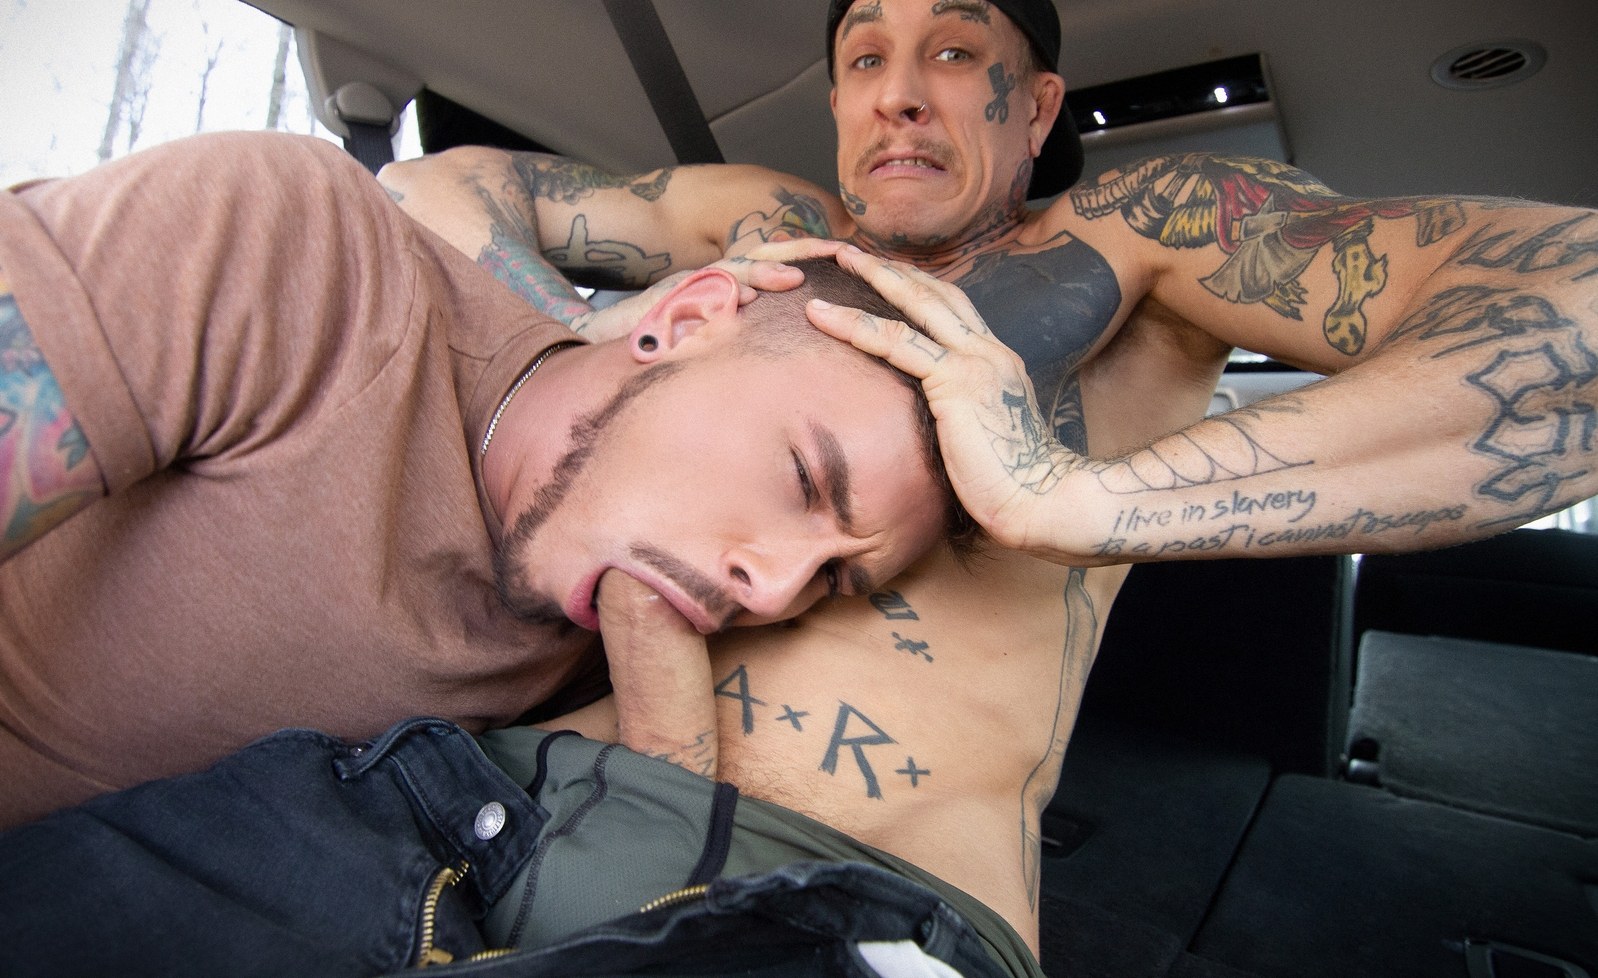 Tattooed men having hardcore gay sex